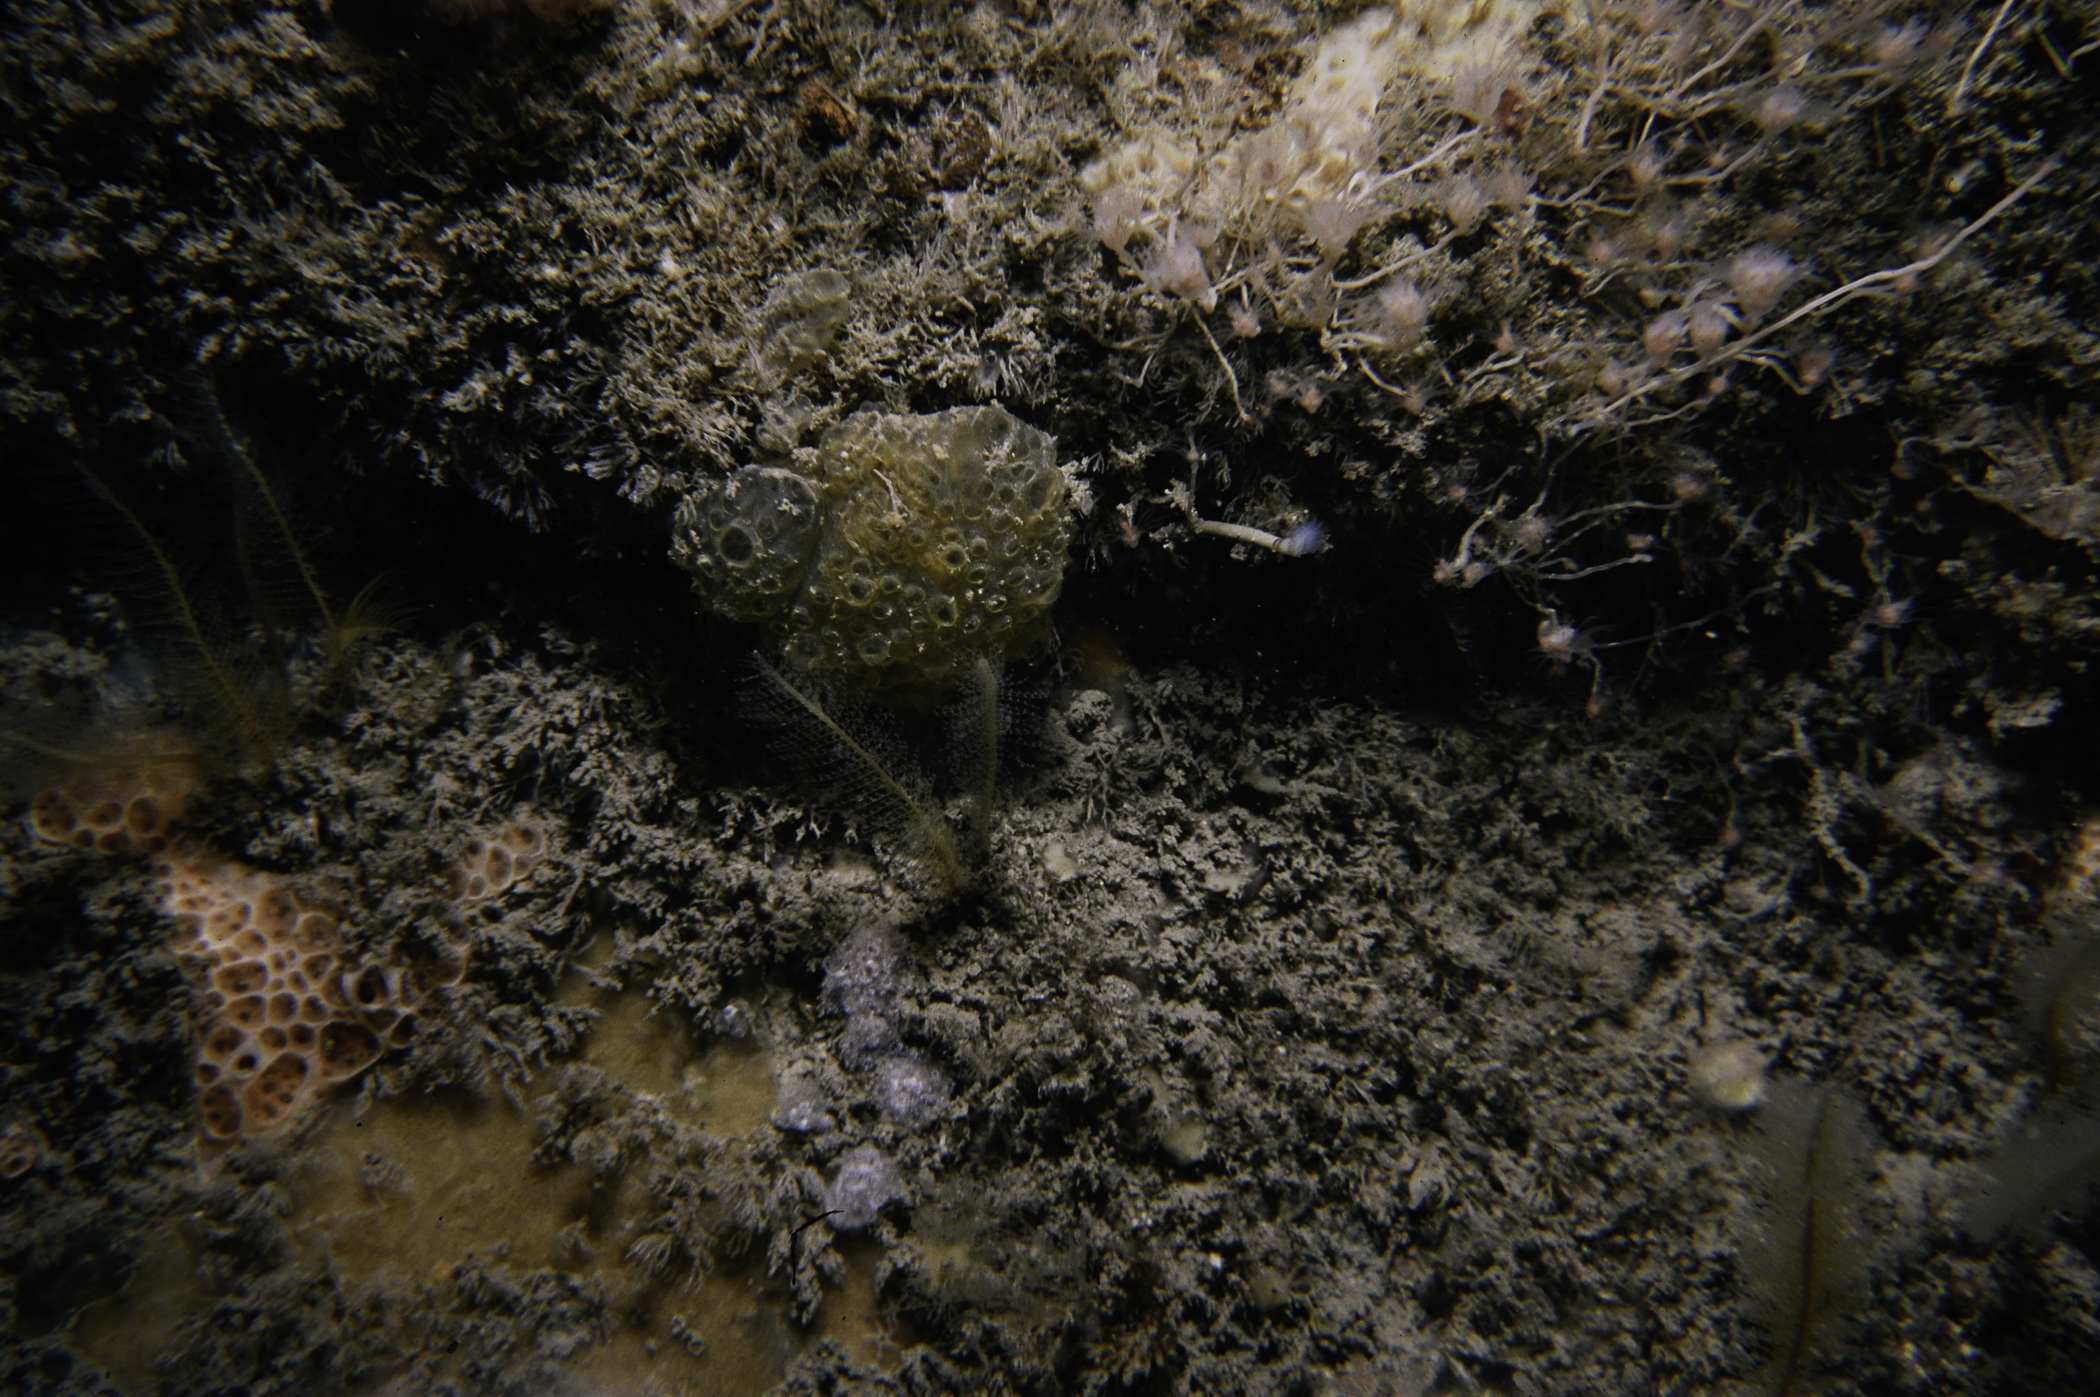 Hemimycale columella, Tubularia indivisa, Nemertesia antennina, Distaplia rosea, Polyclinum aurantium. Site: Wreck of The Lochgary, Rathlin Is. 